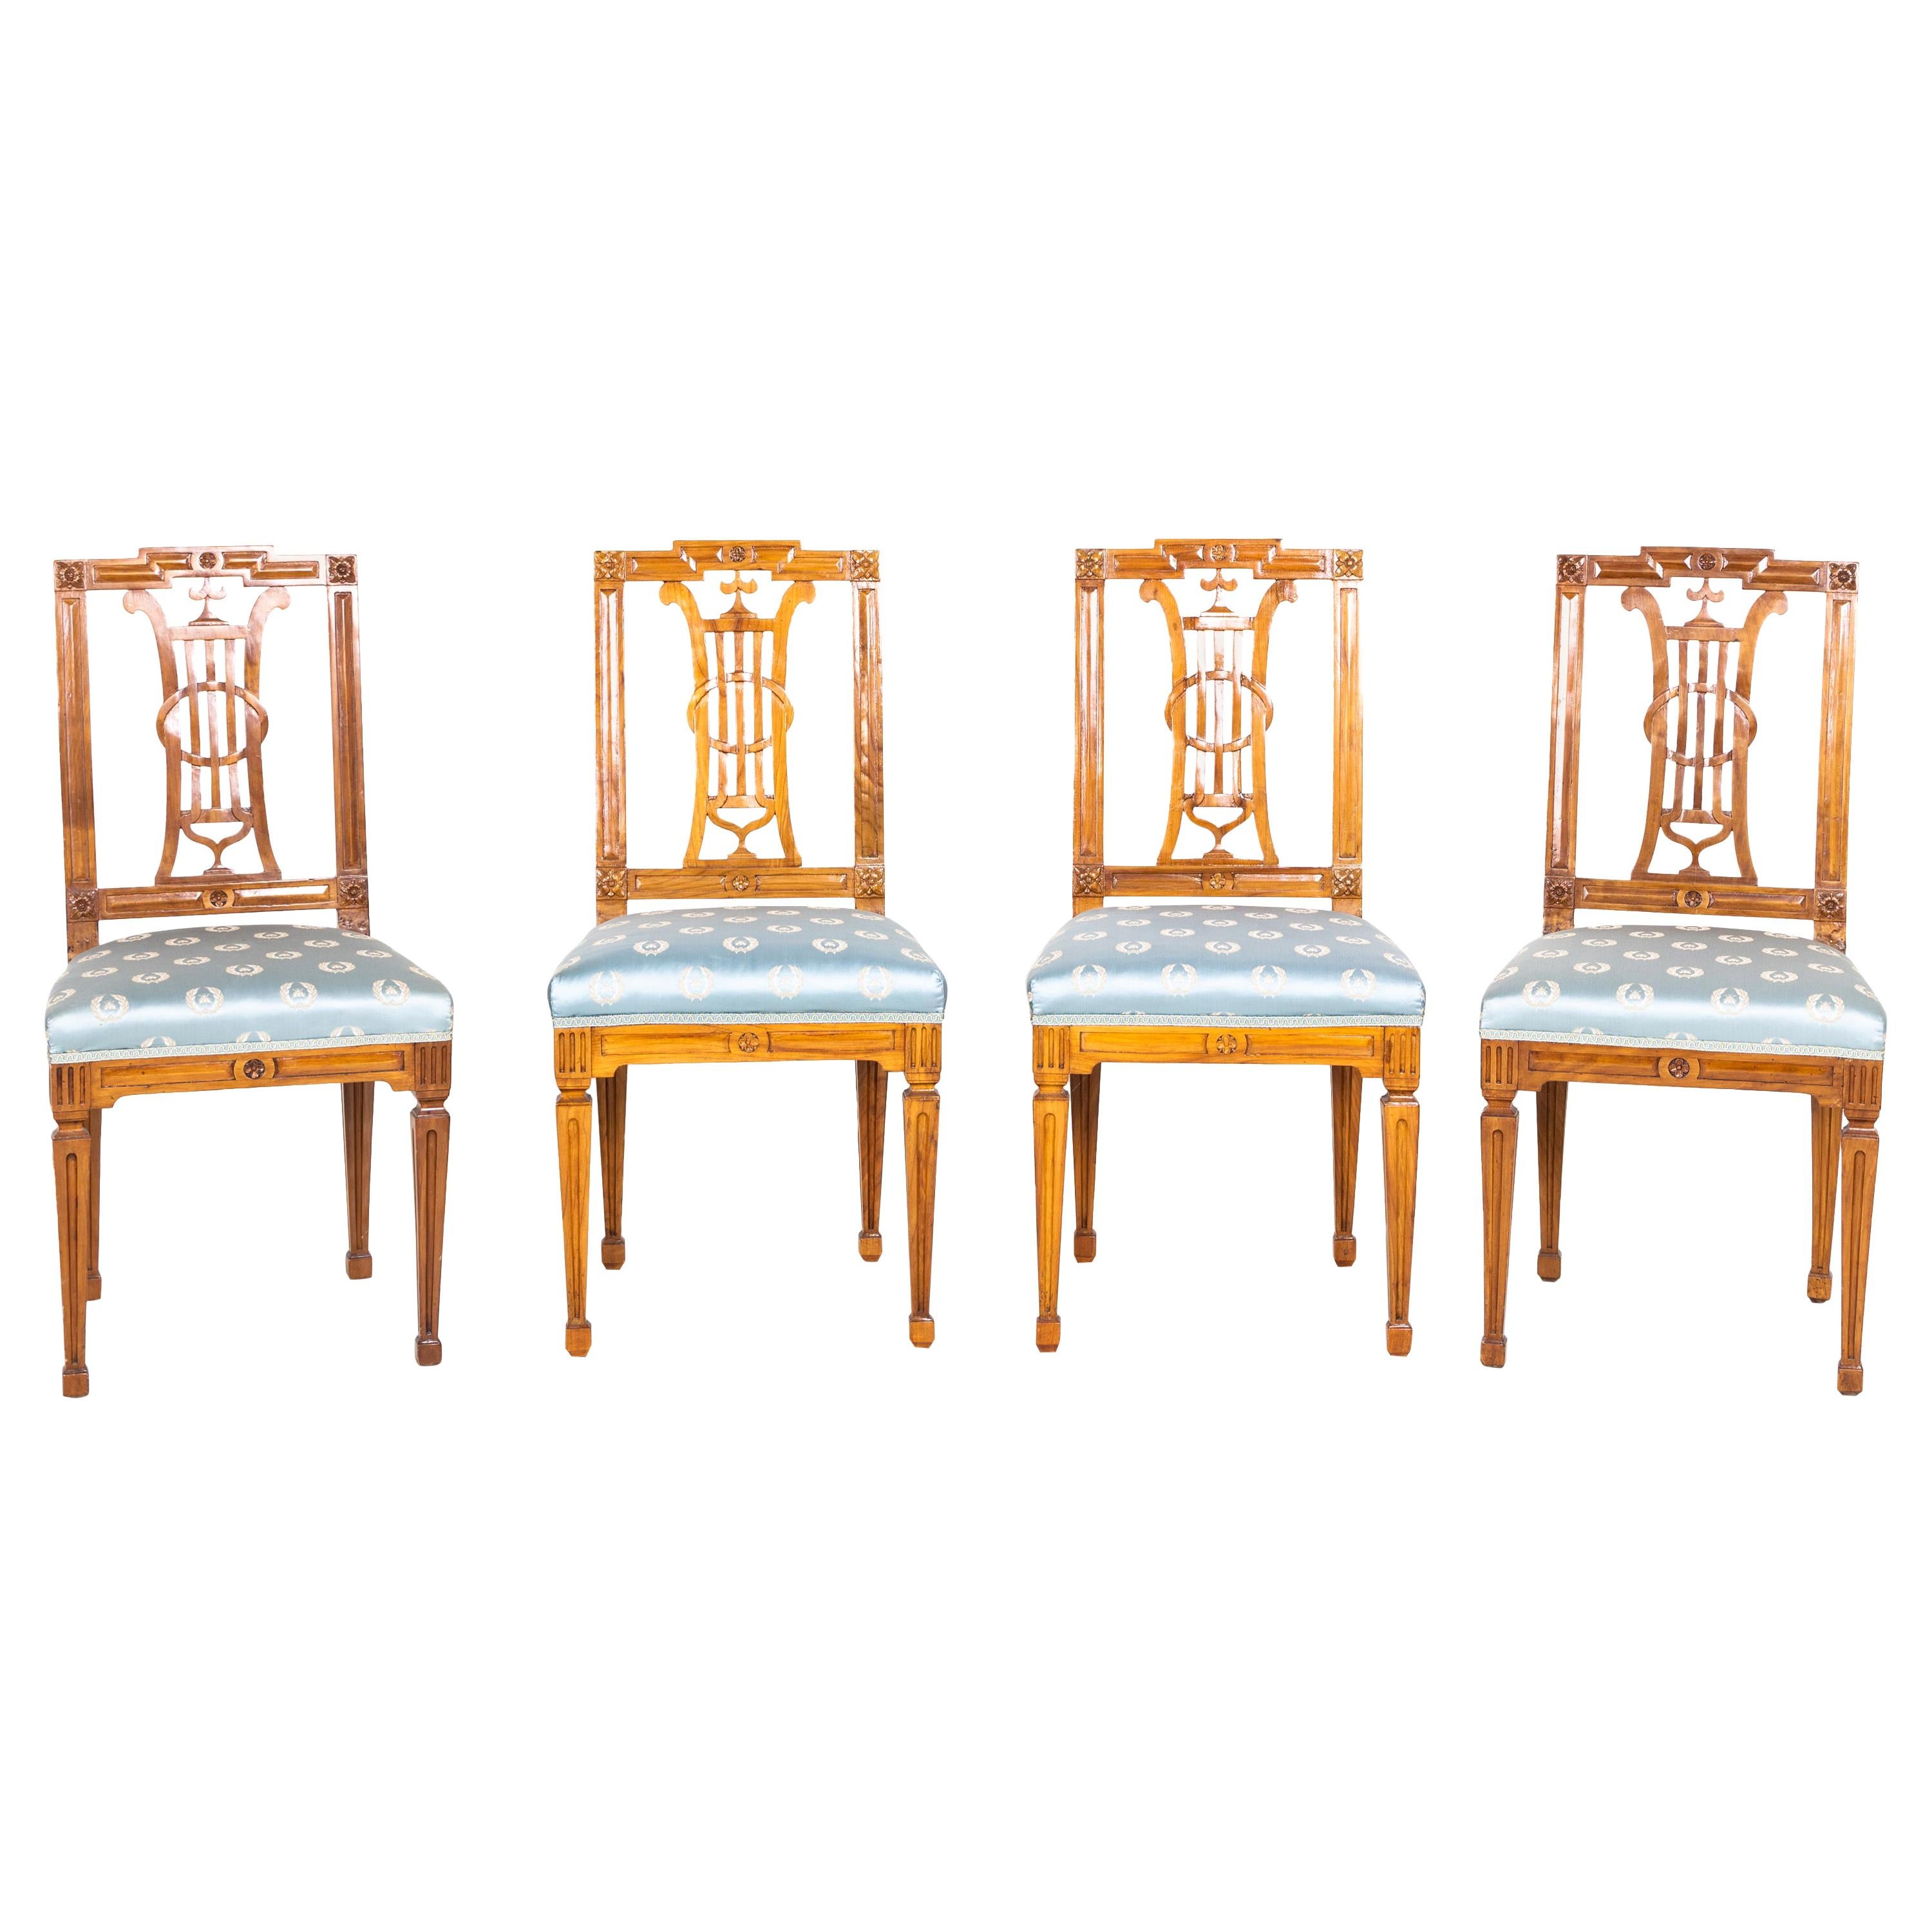 Set of Four Chairs, Bavaria / Germany, circa 1785